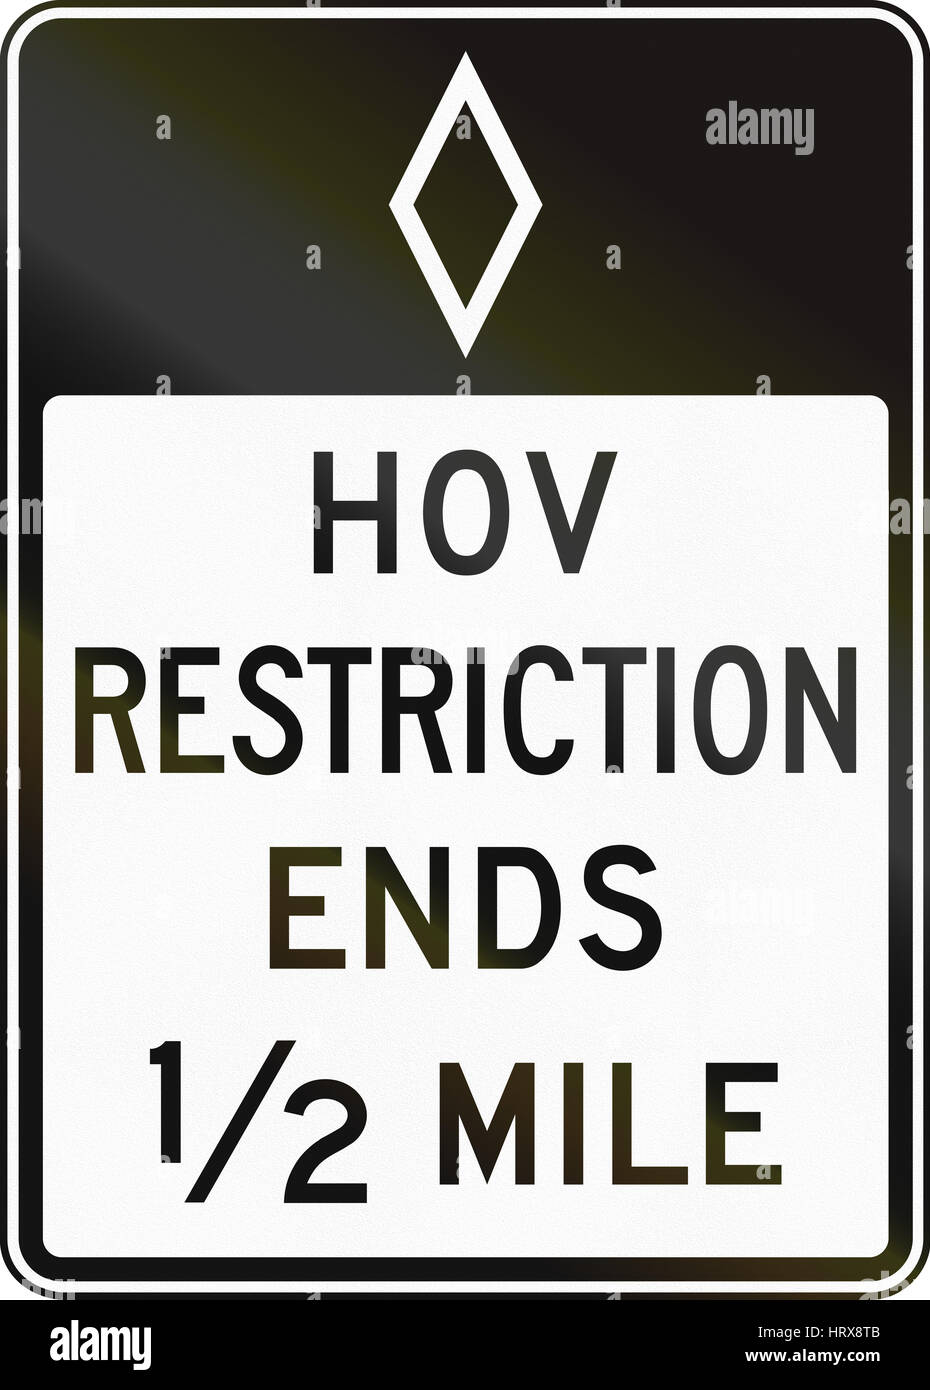 United States MUTCD regulatory road sign - High occupancy vehicle lane ends. Stock Photo